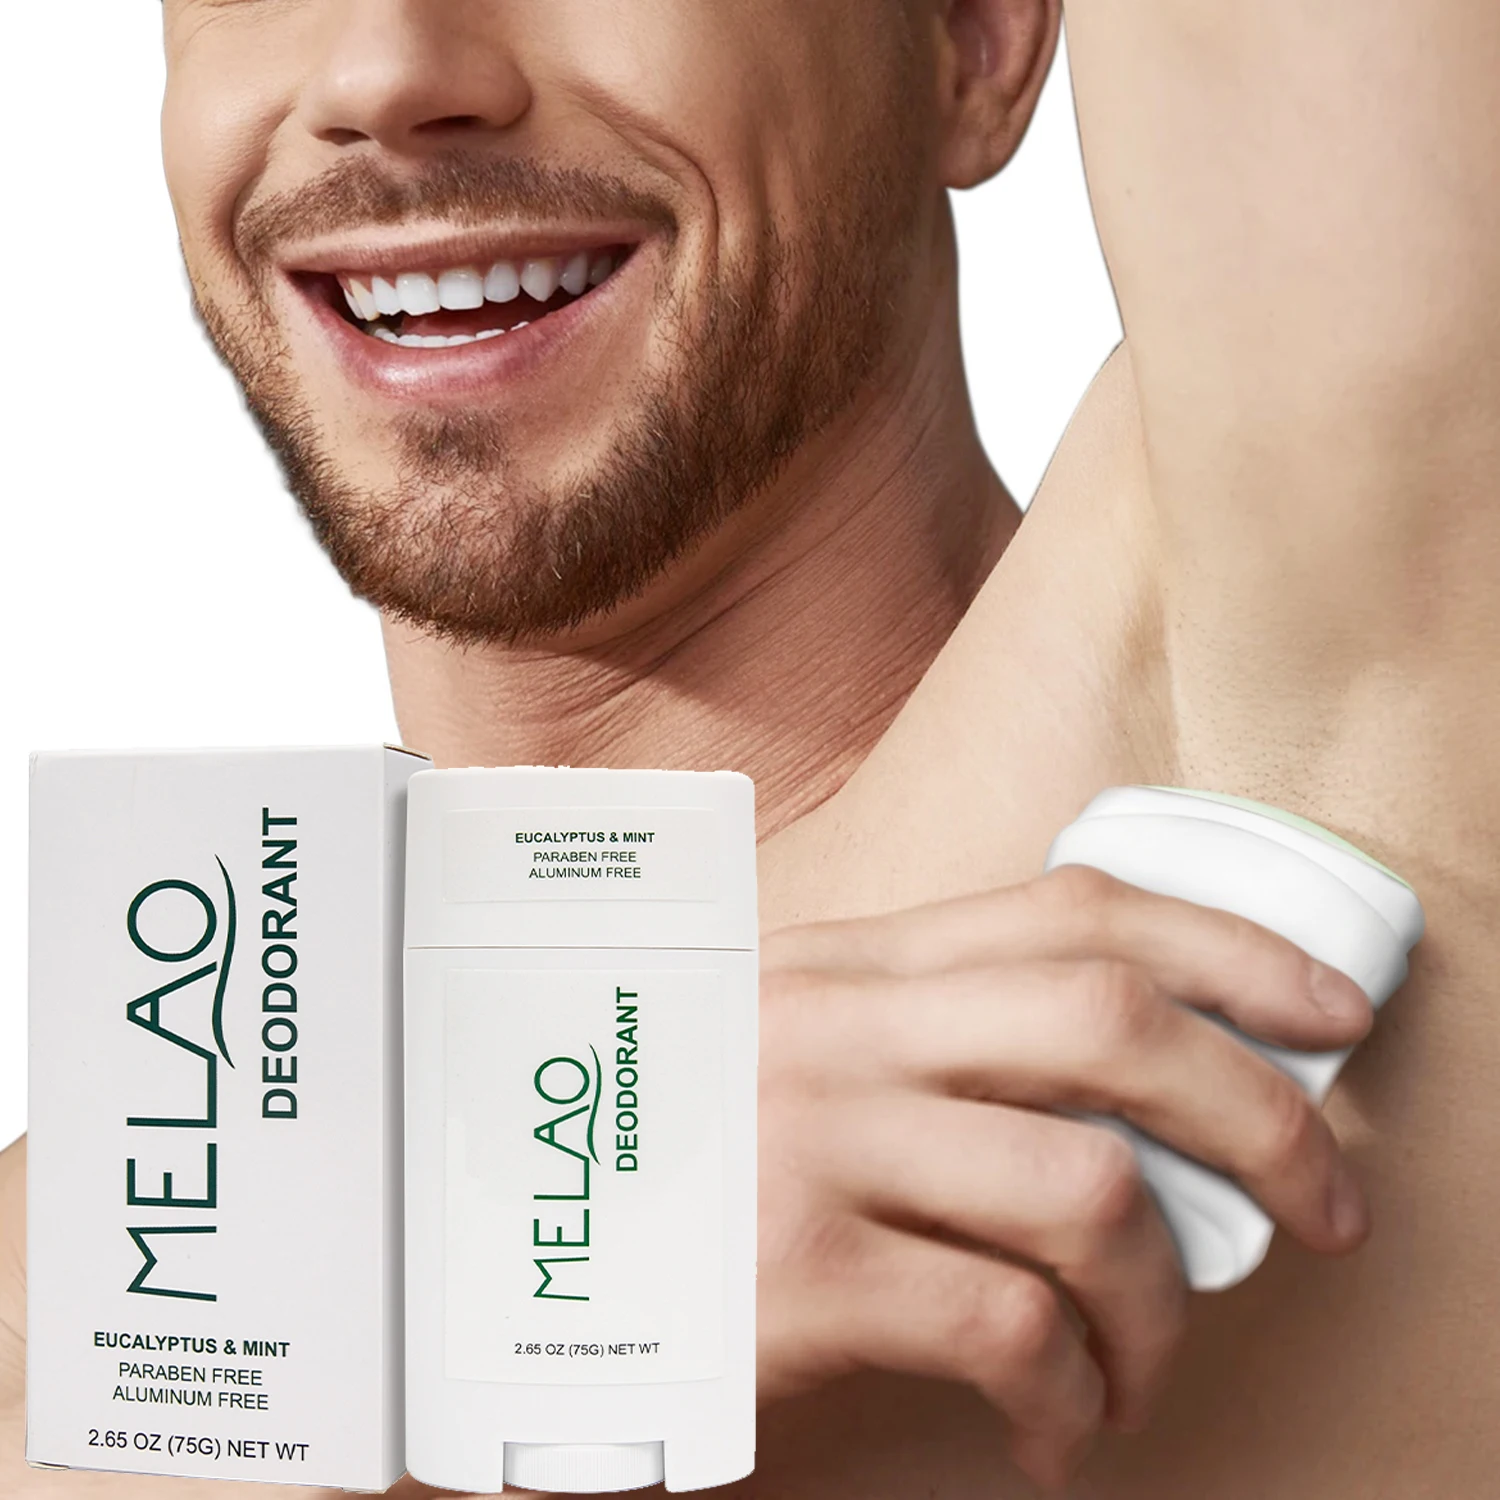 

MELAO Lasting 12 Hours Aluminum Roll On Free Effective Armpit Odor Deodorants Antiperspirant Stick Anti Sweat Deodorant